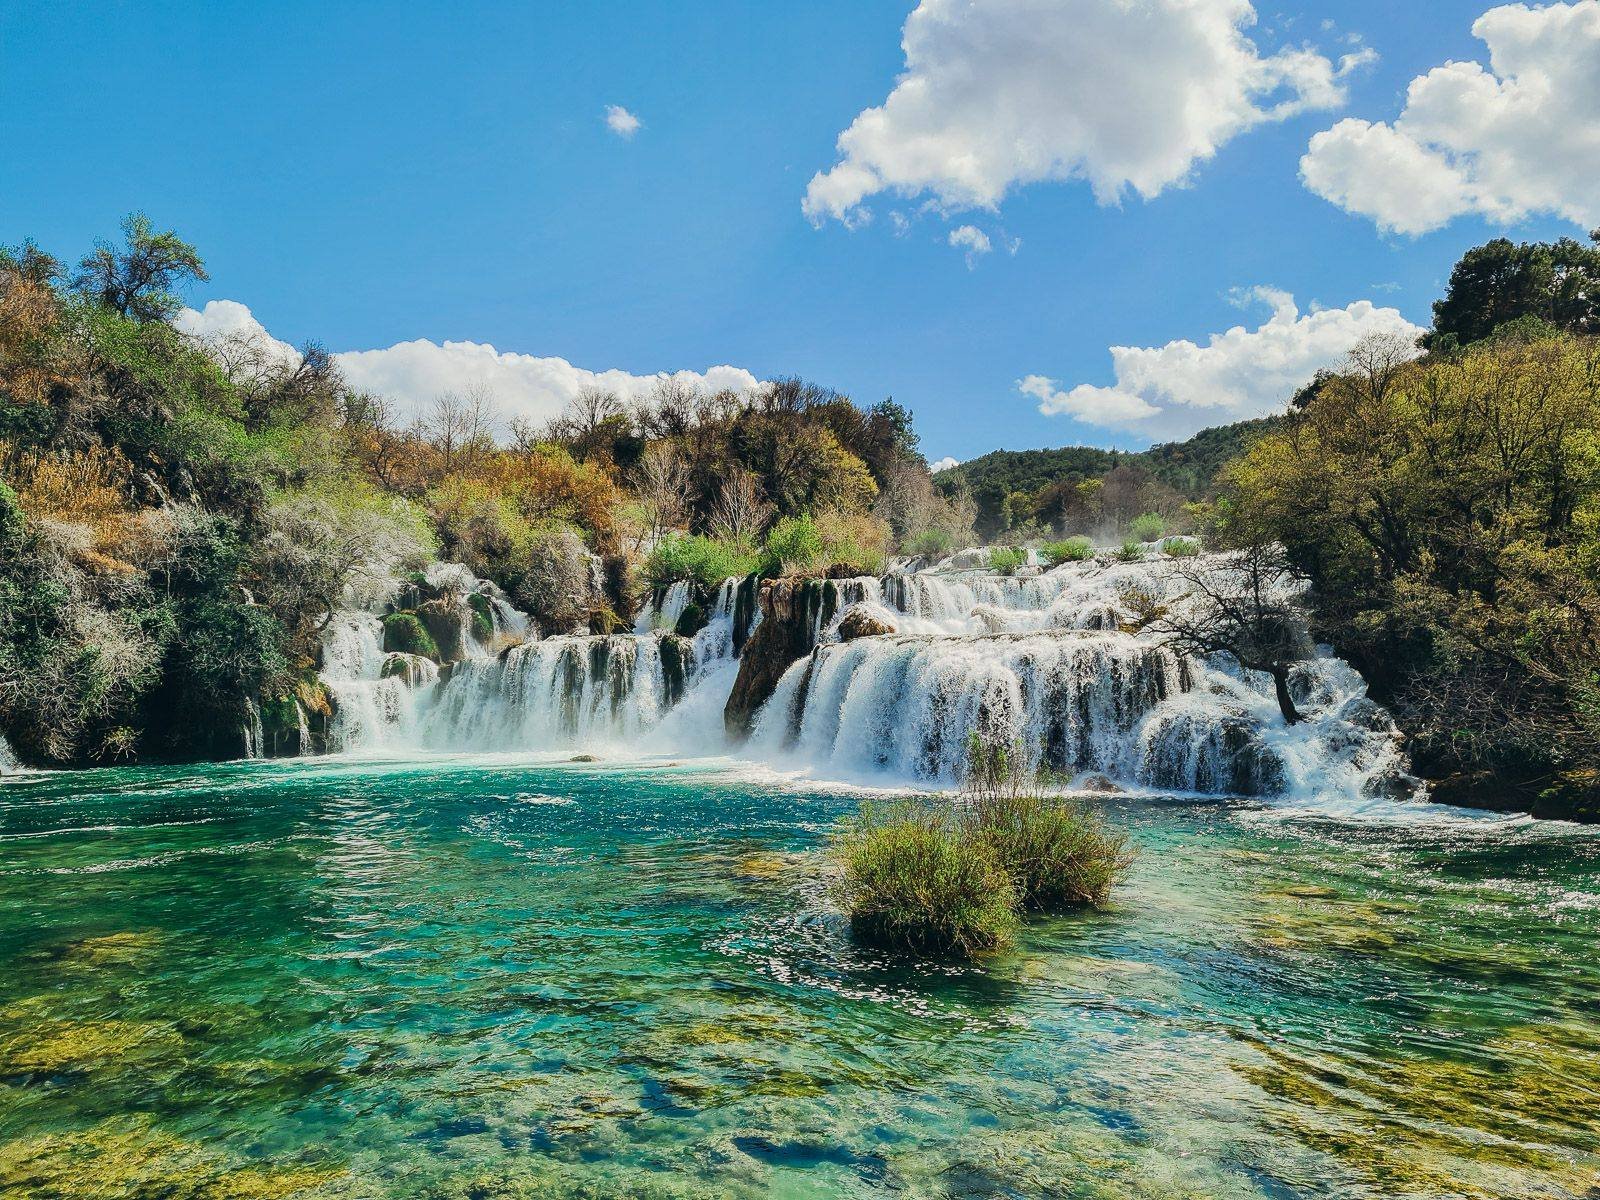 krka waterfalls in croatia, a series of falls into a turquoise green lake